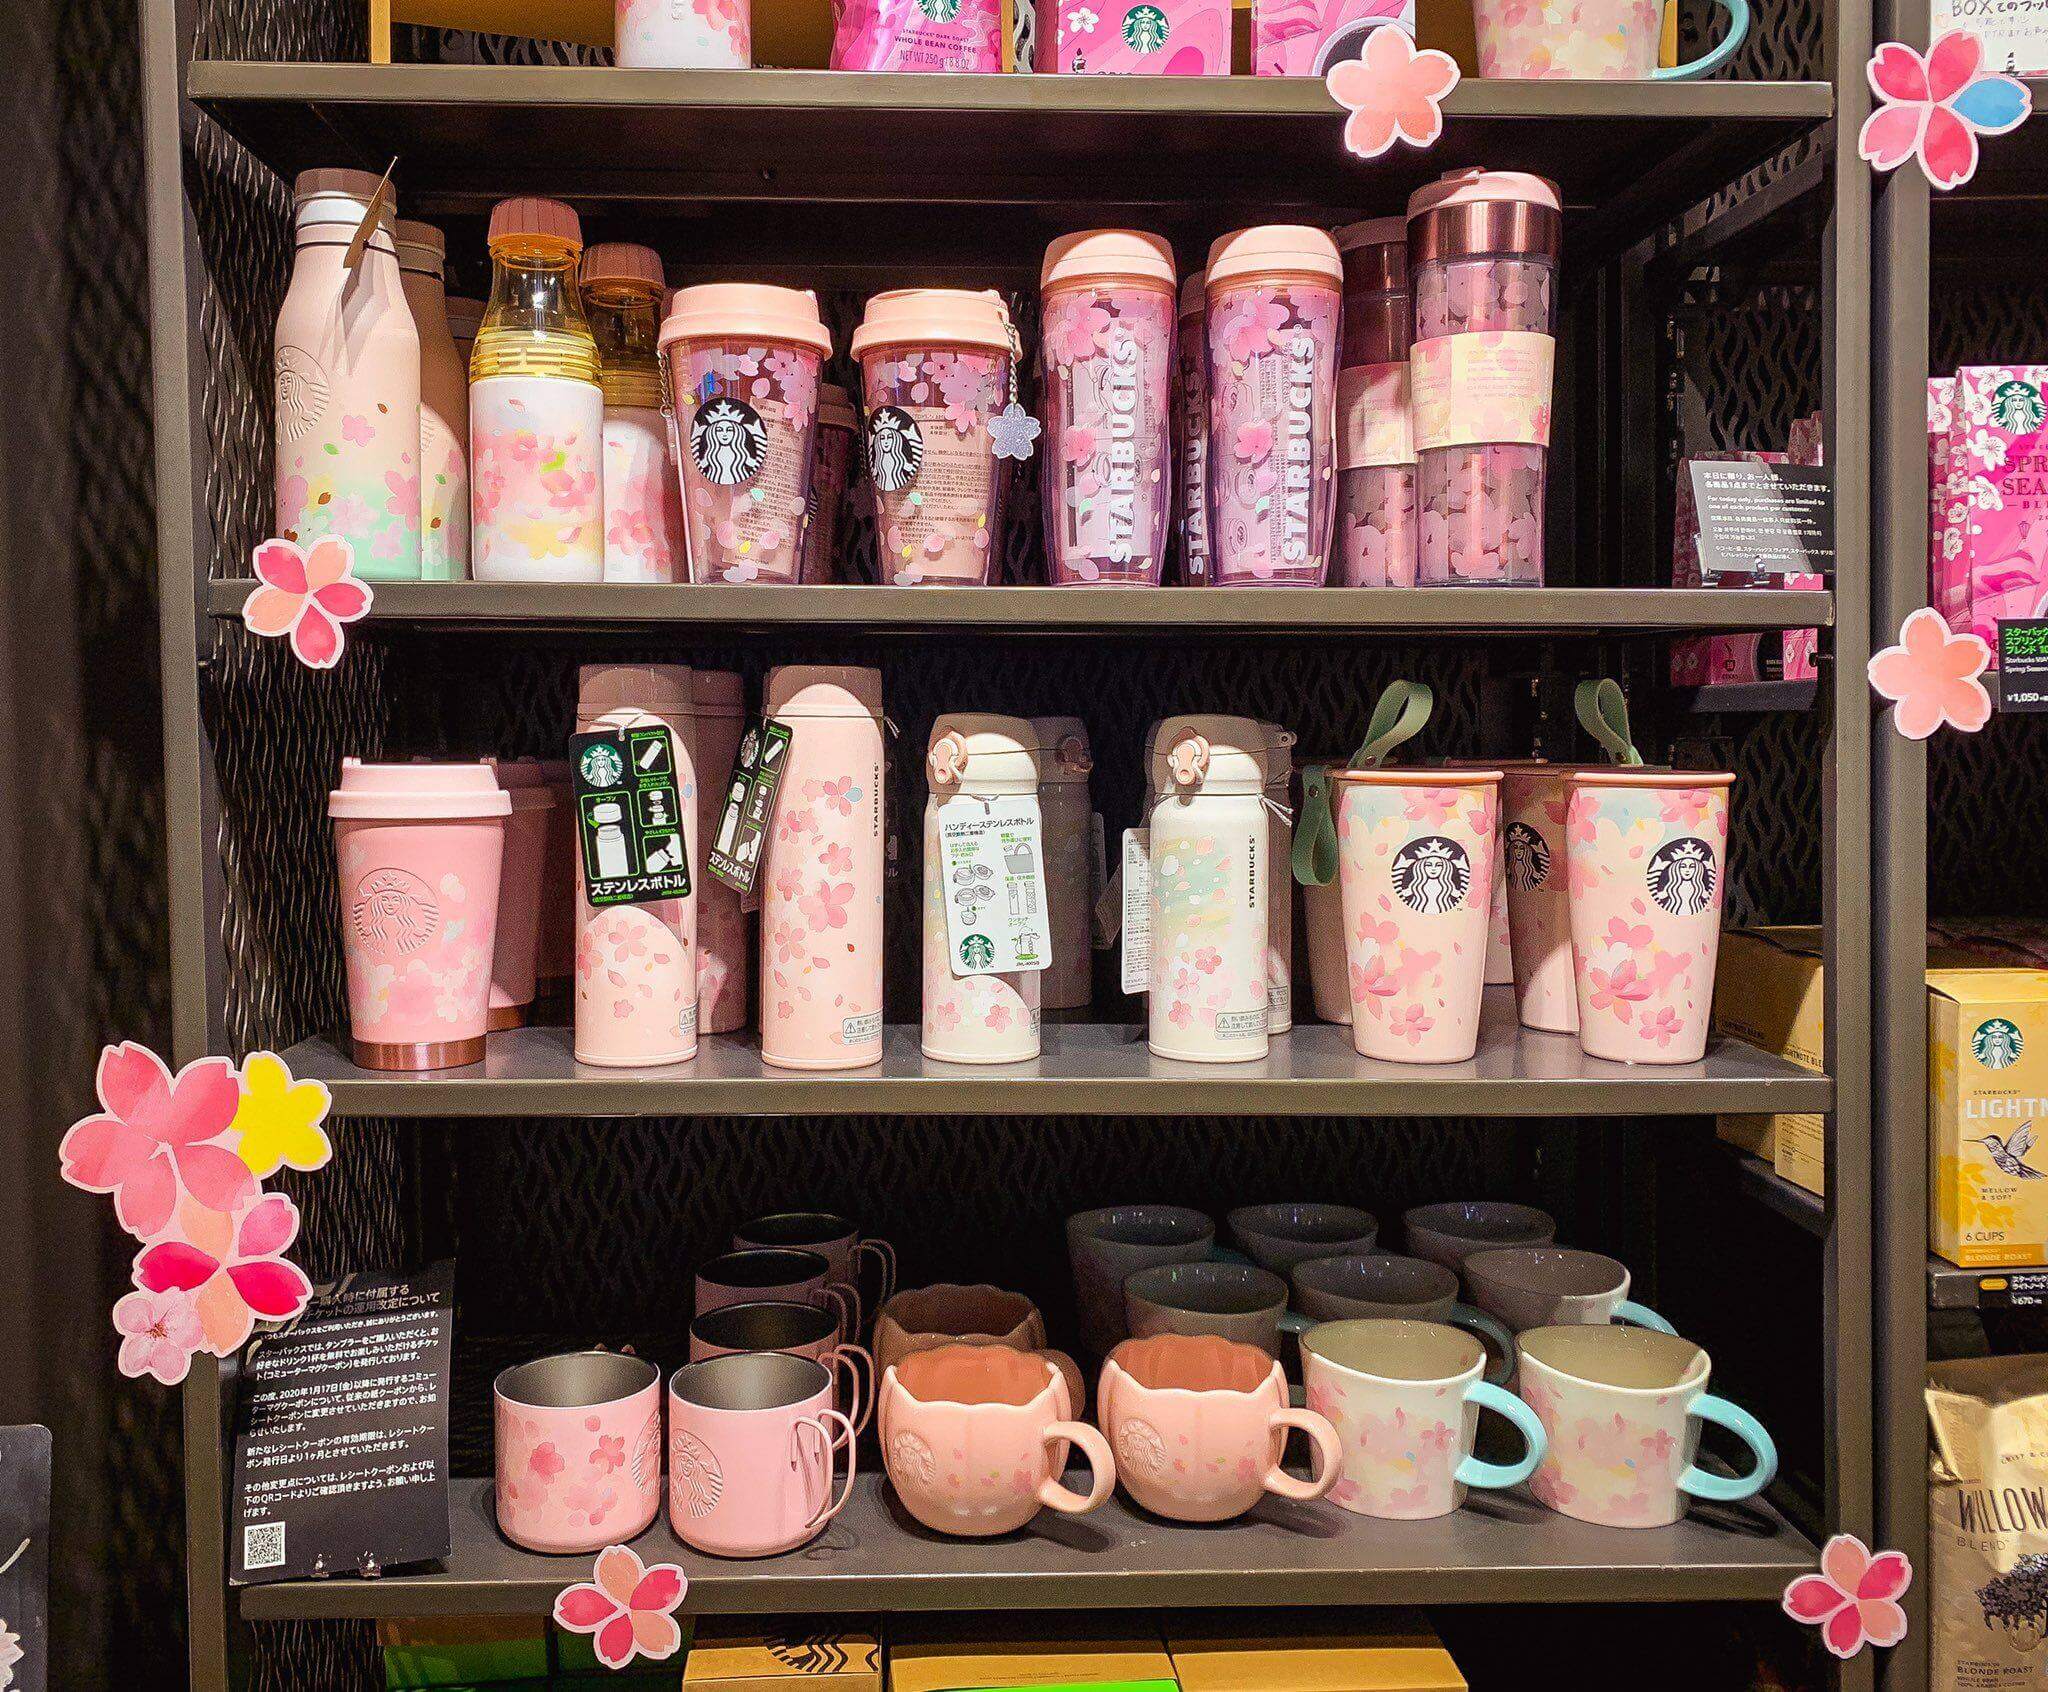 Starbucks Japan's brand new SAKURA merchandise collection